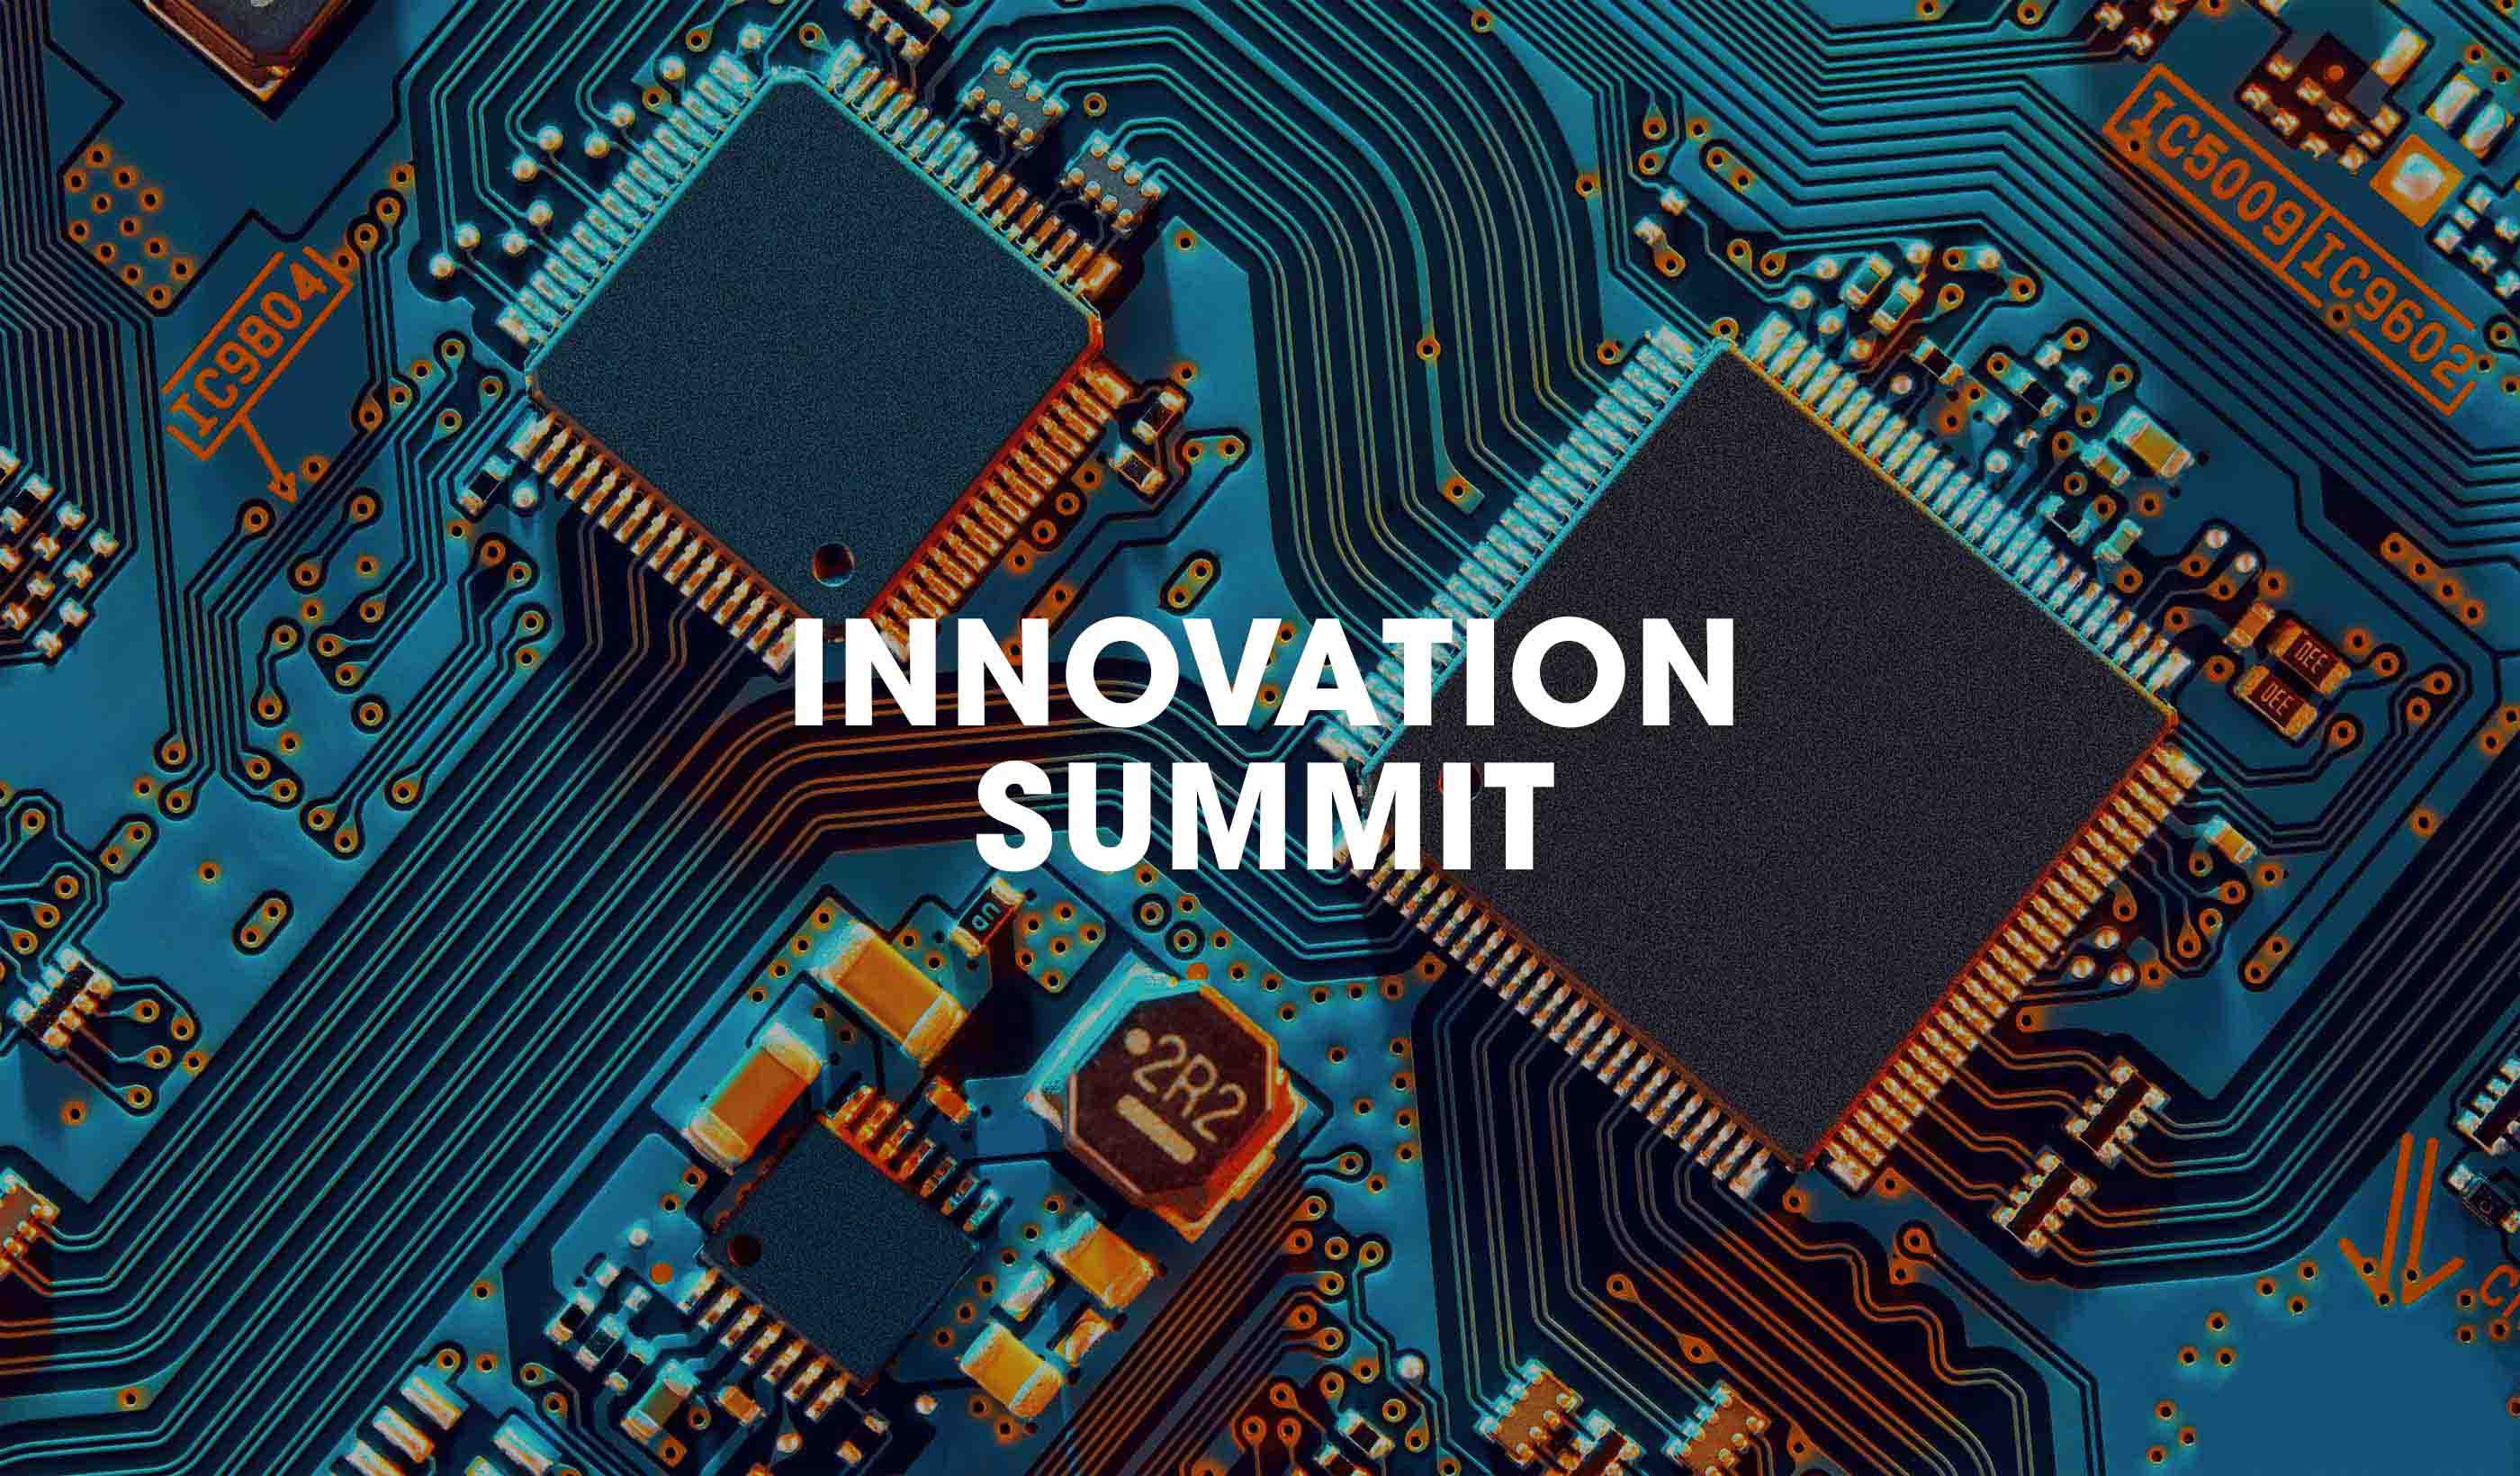 Innovation Summit: Digital Economy Overview